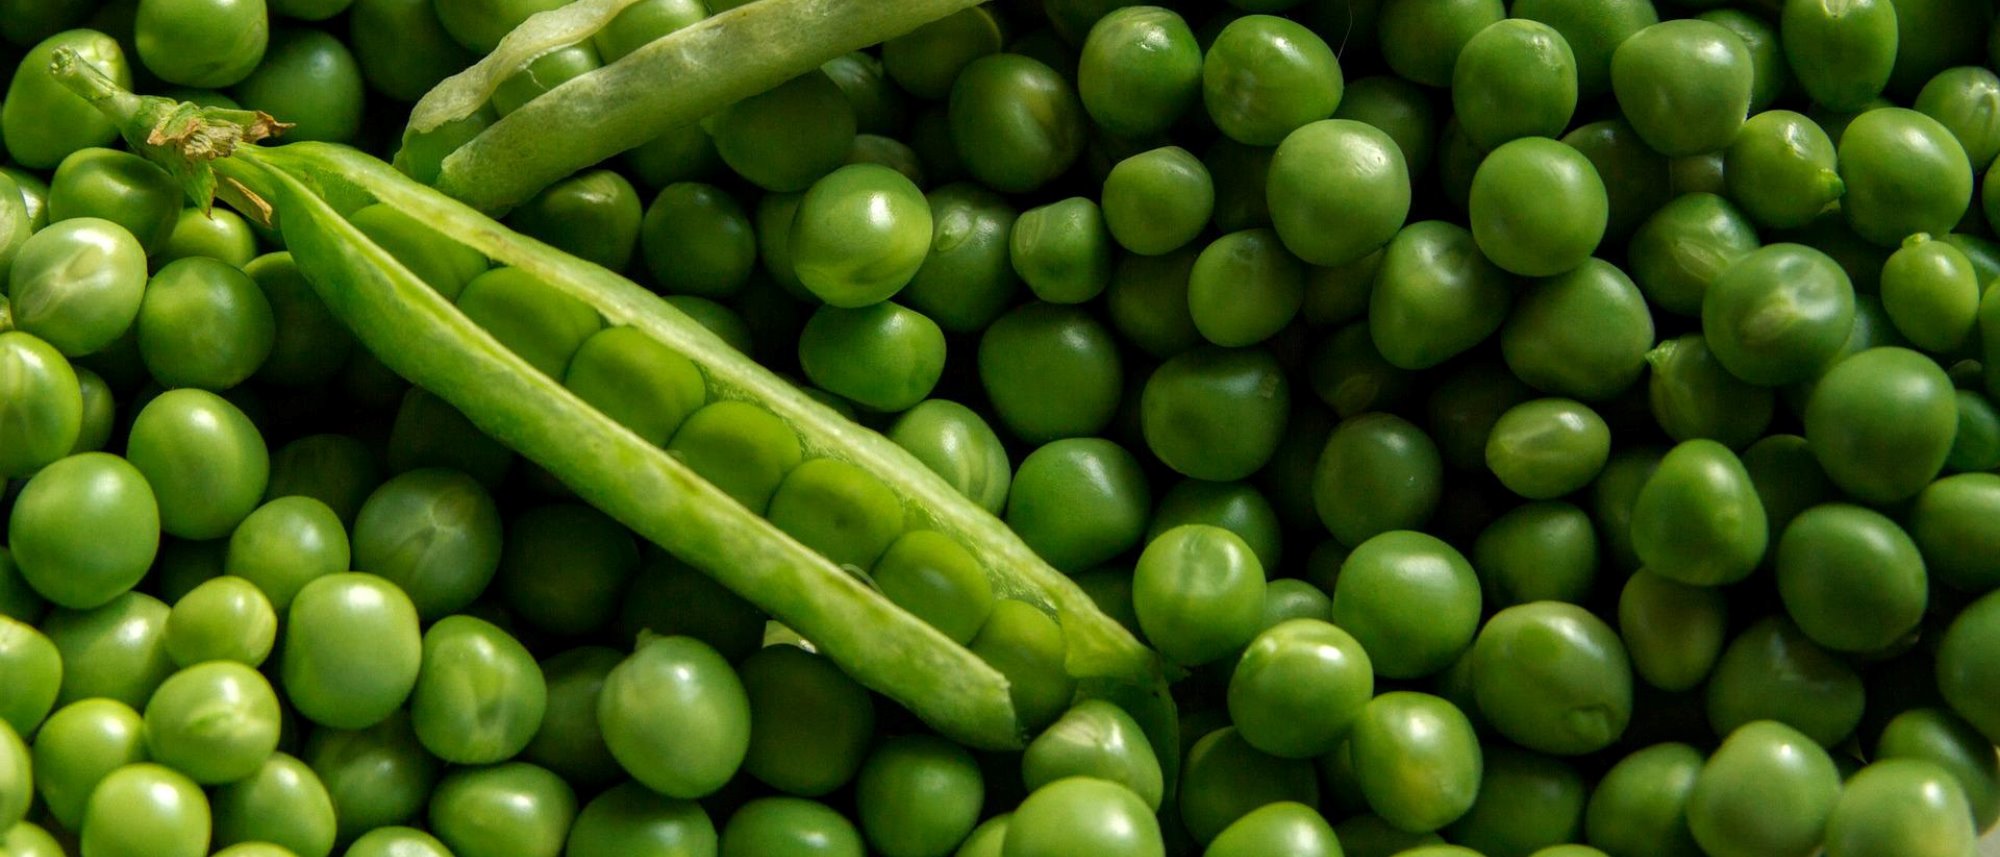 Grow tasty snap peas plus other varieties